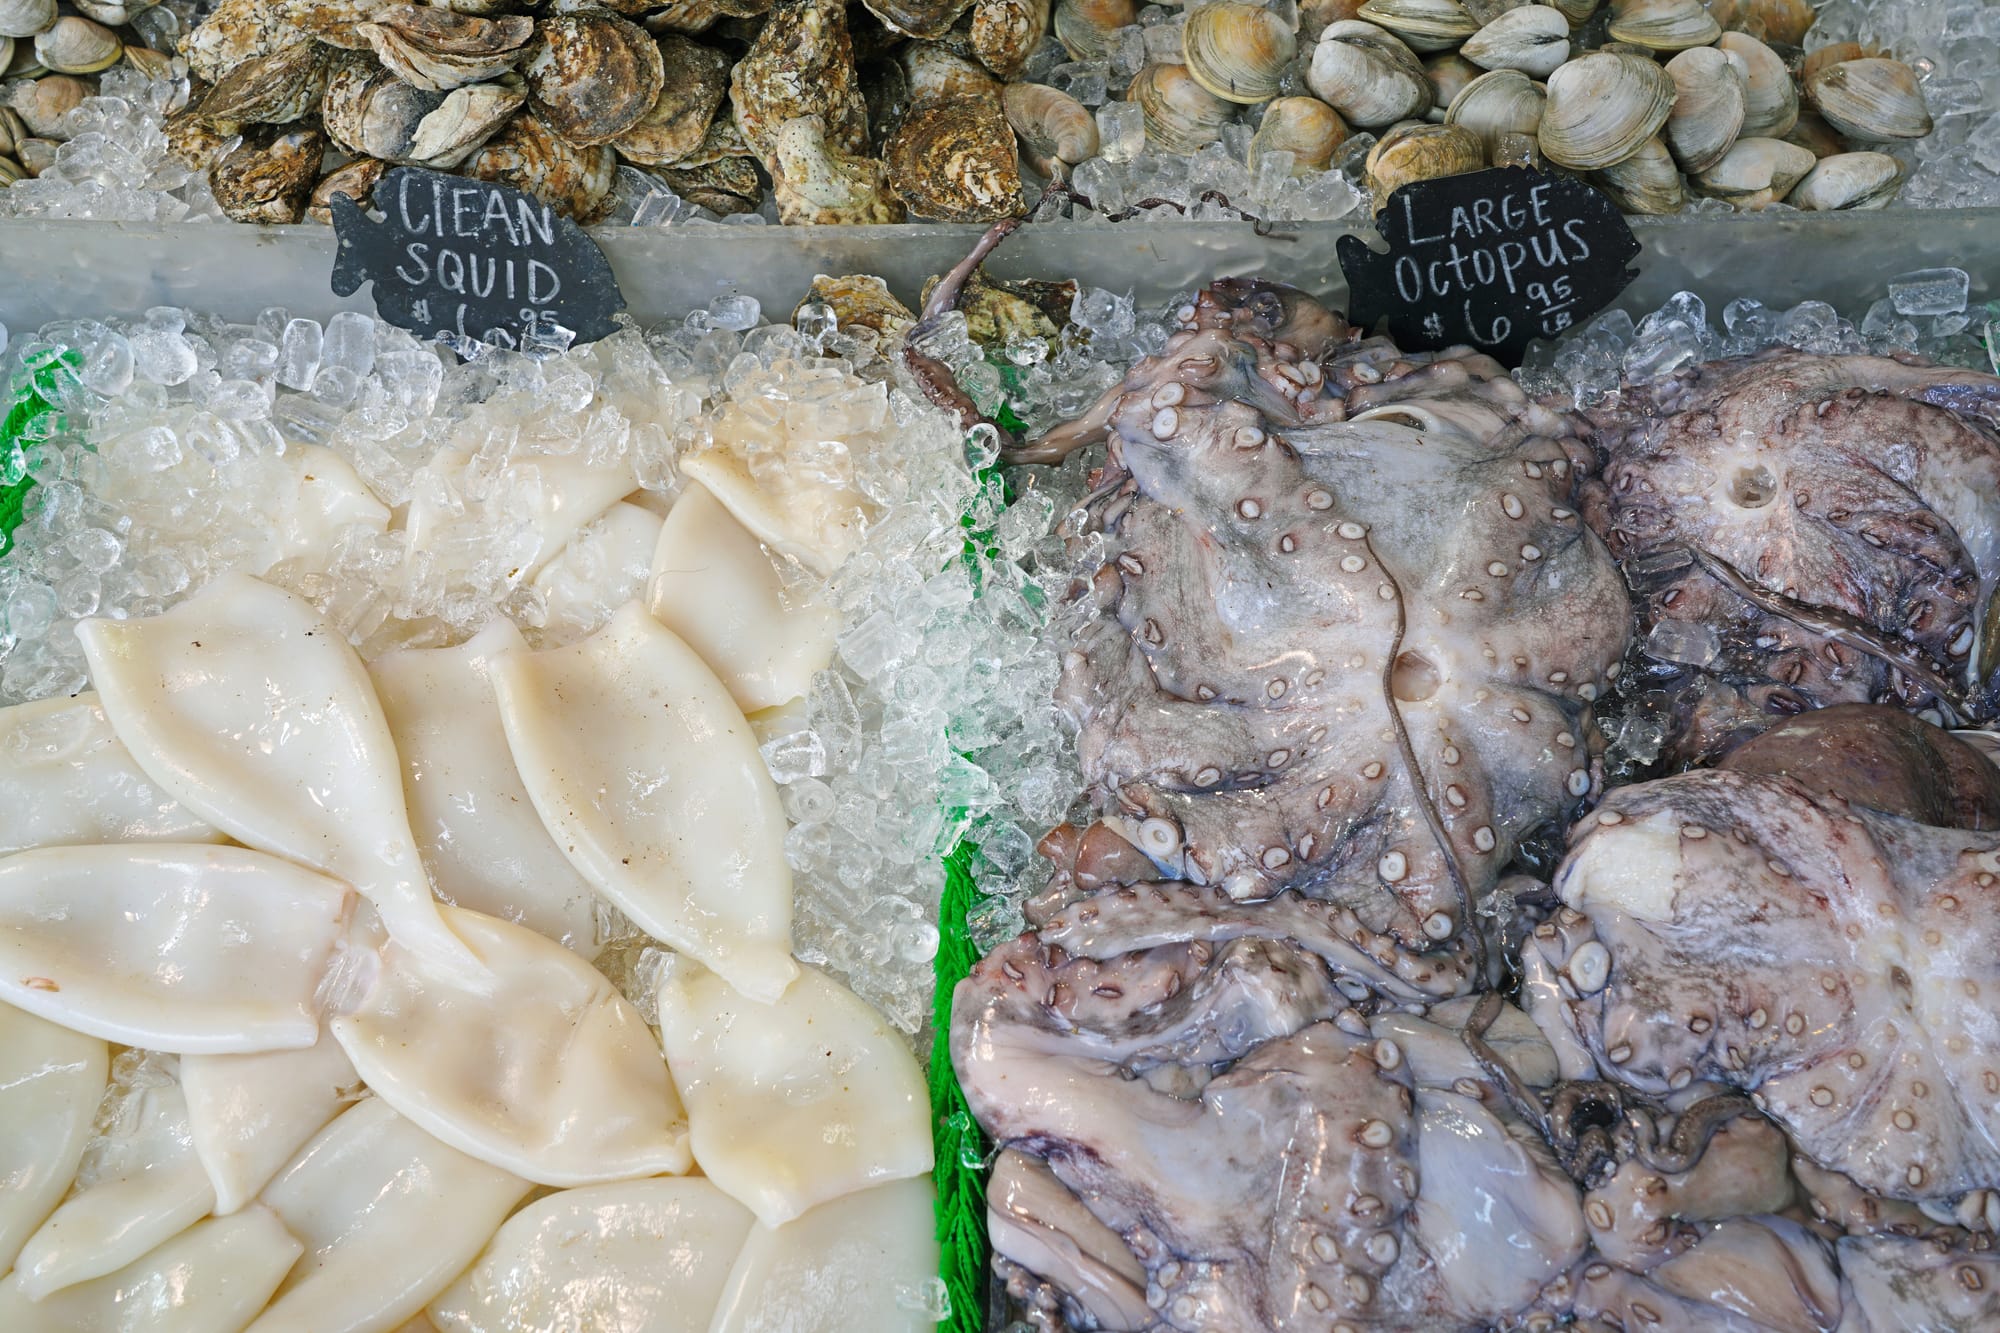 clean squid calamari and large octopus at fish market seller